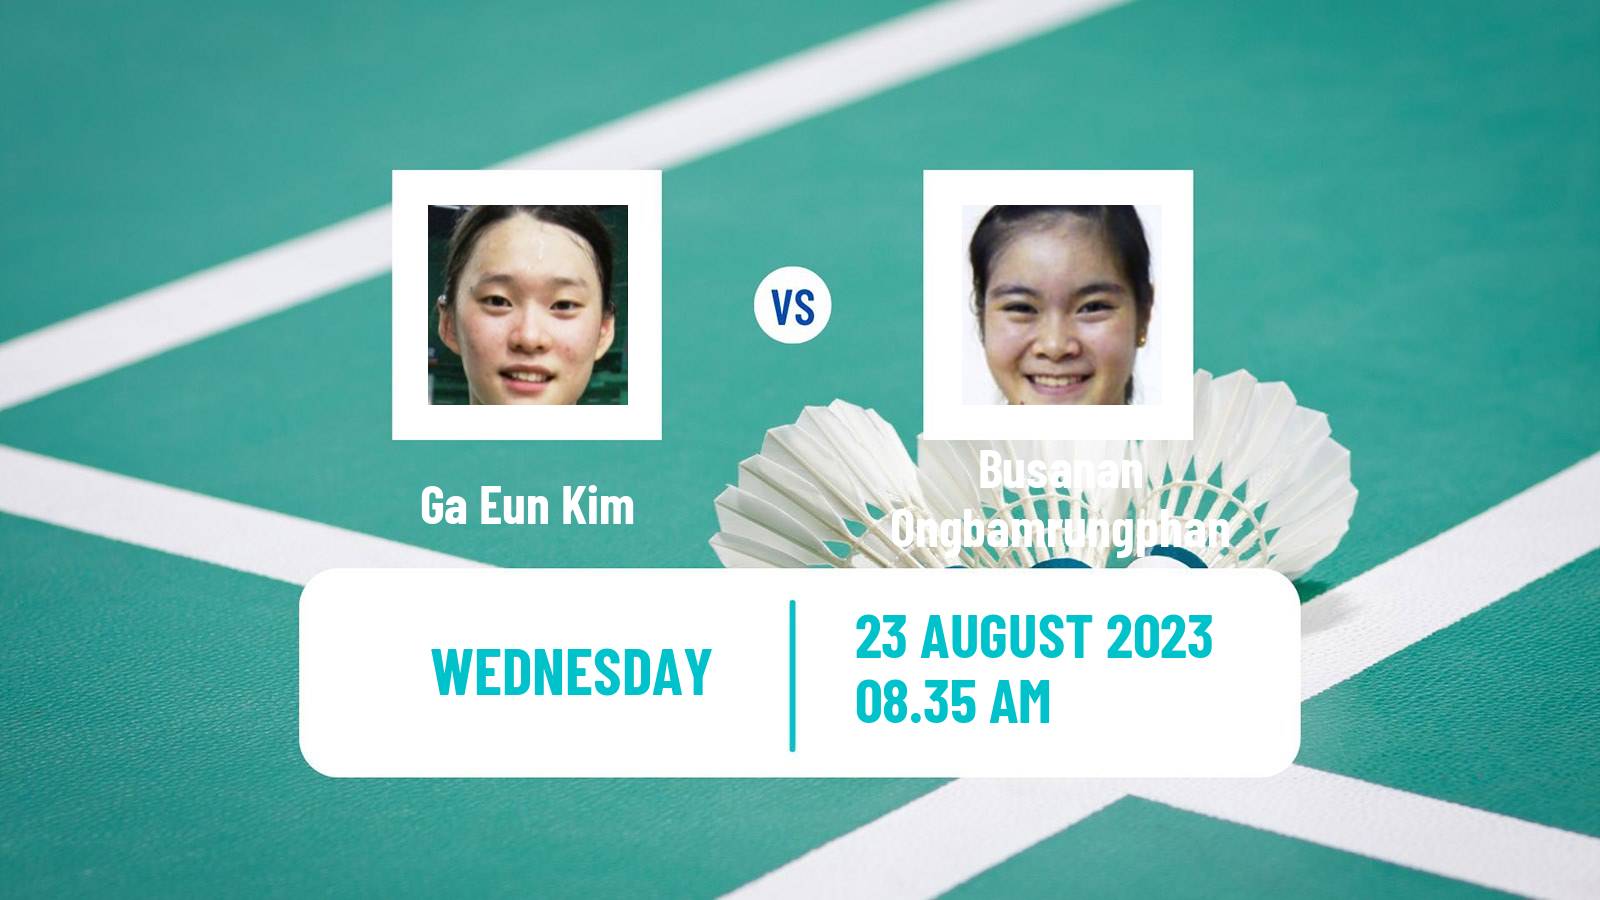 Badminton BWF World Championships Women Ga Eun Kim - Busanan Ongbamrungphan